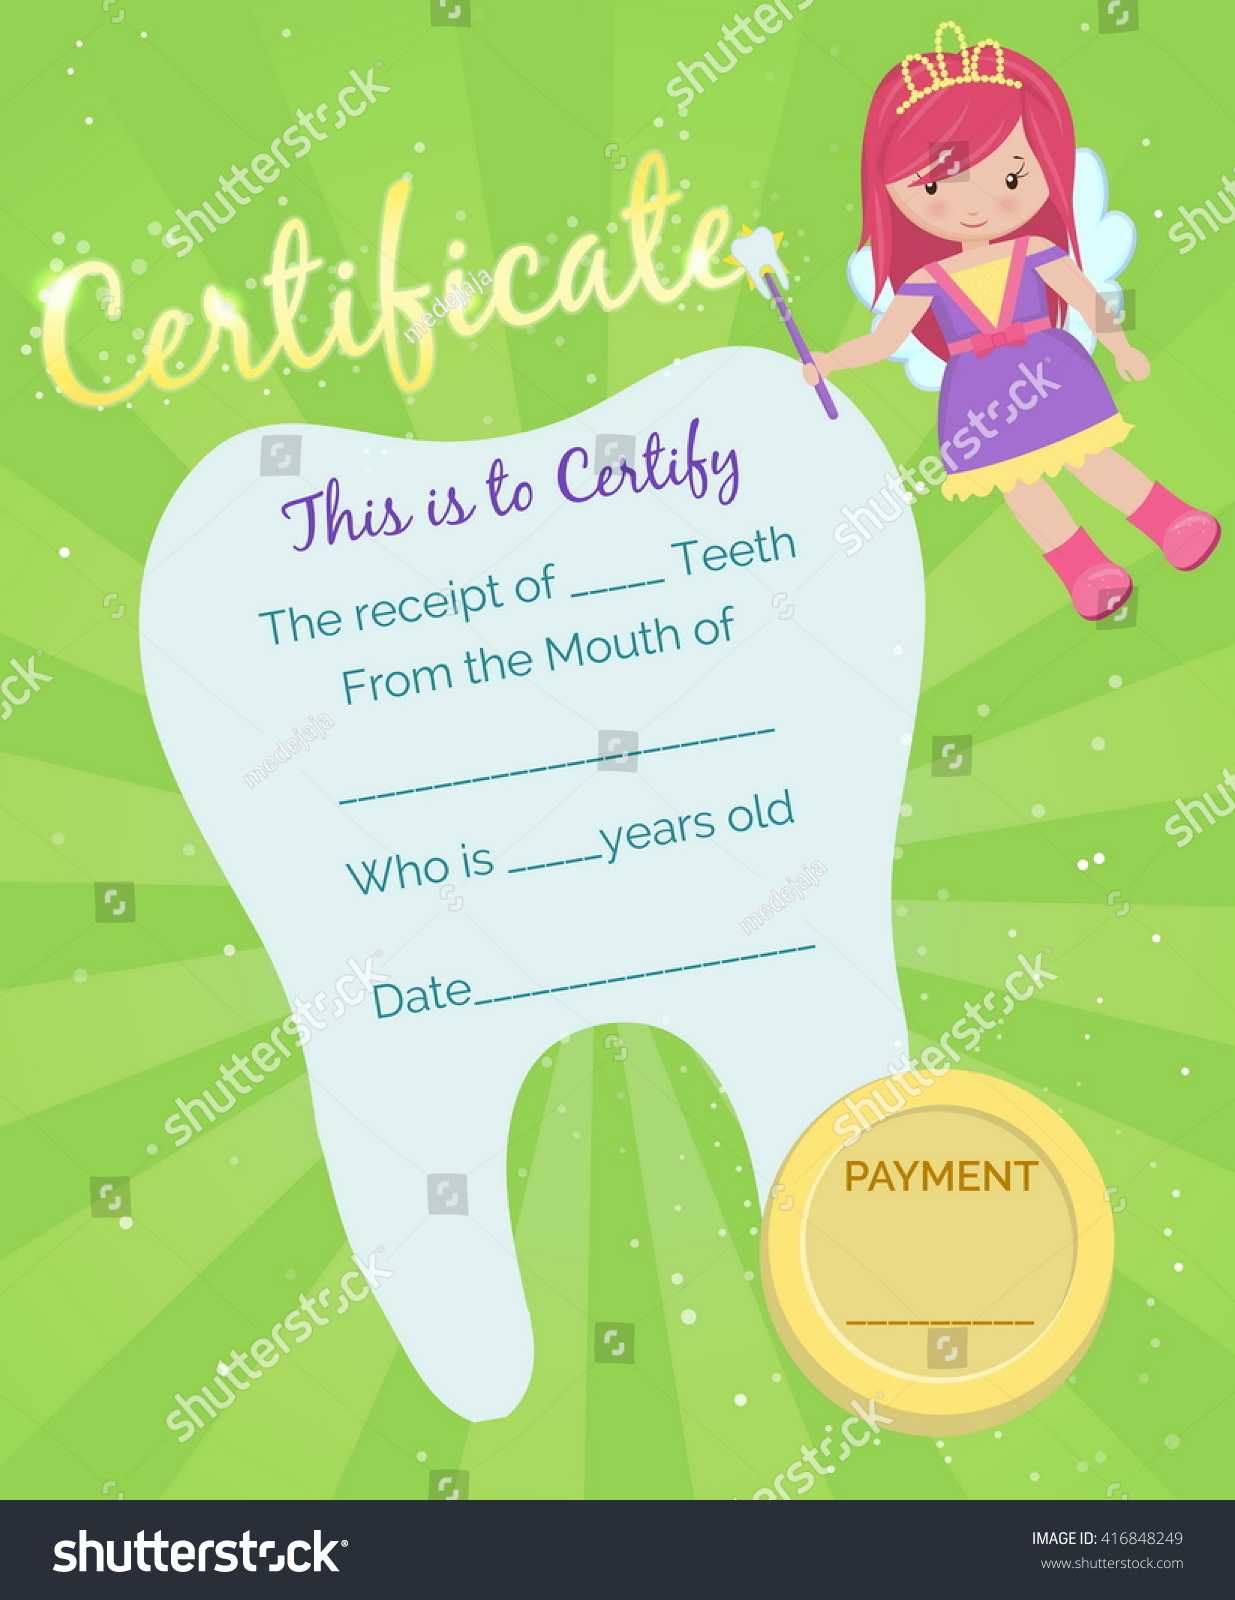 Cute Tooth Fairy Receipt Certificate Template | Royalty Free Throughout Tooth Fairy Certificate Template Free